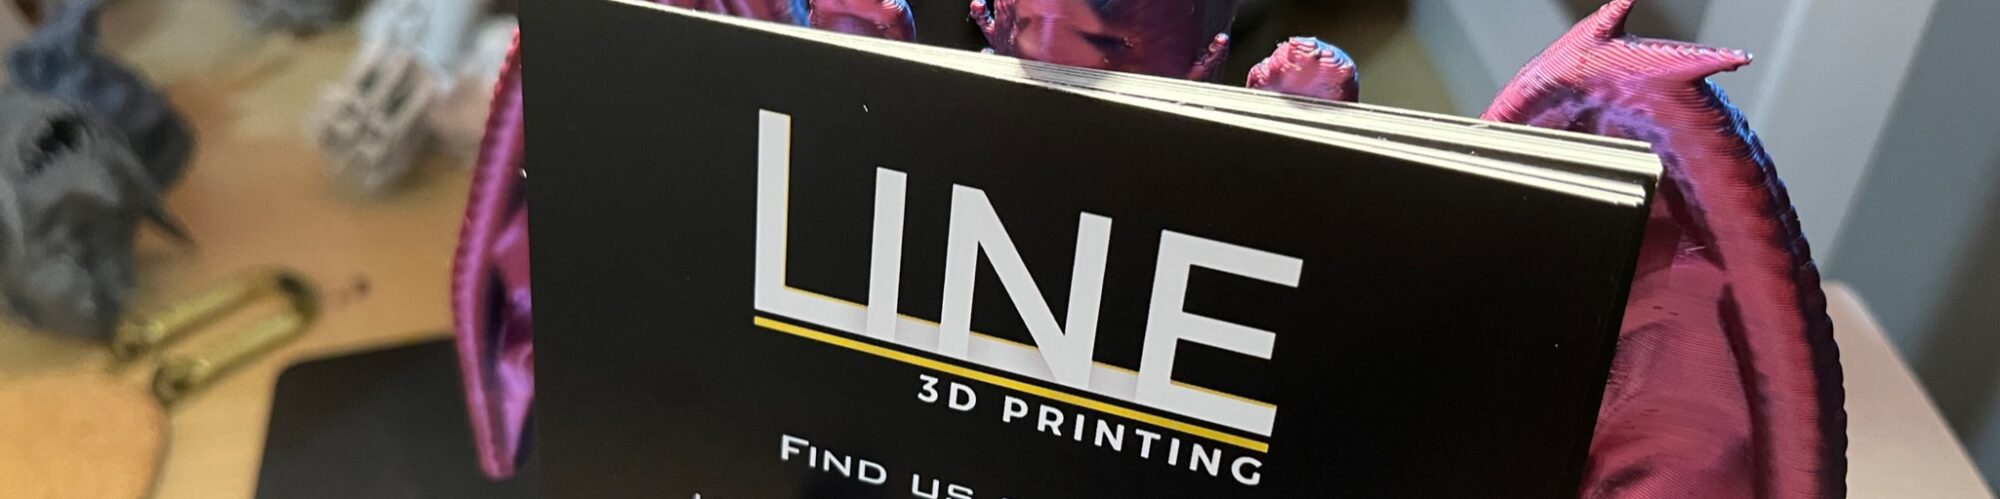 Line 3D Printing